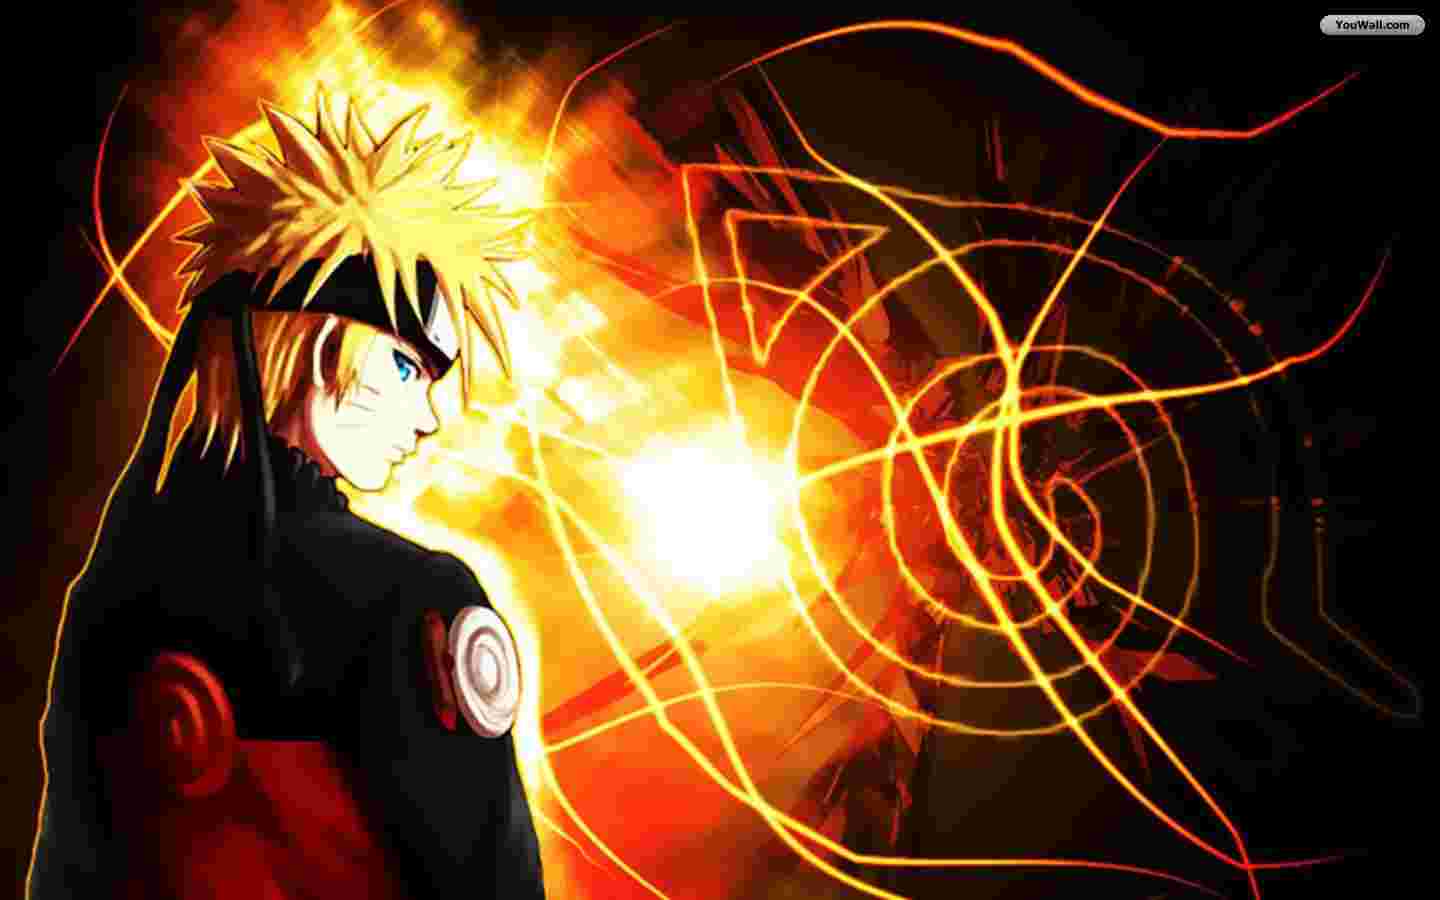 52 Gambar Naruto Wallpaper 3d Kekinian